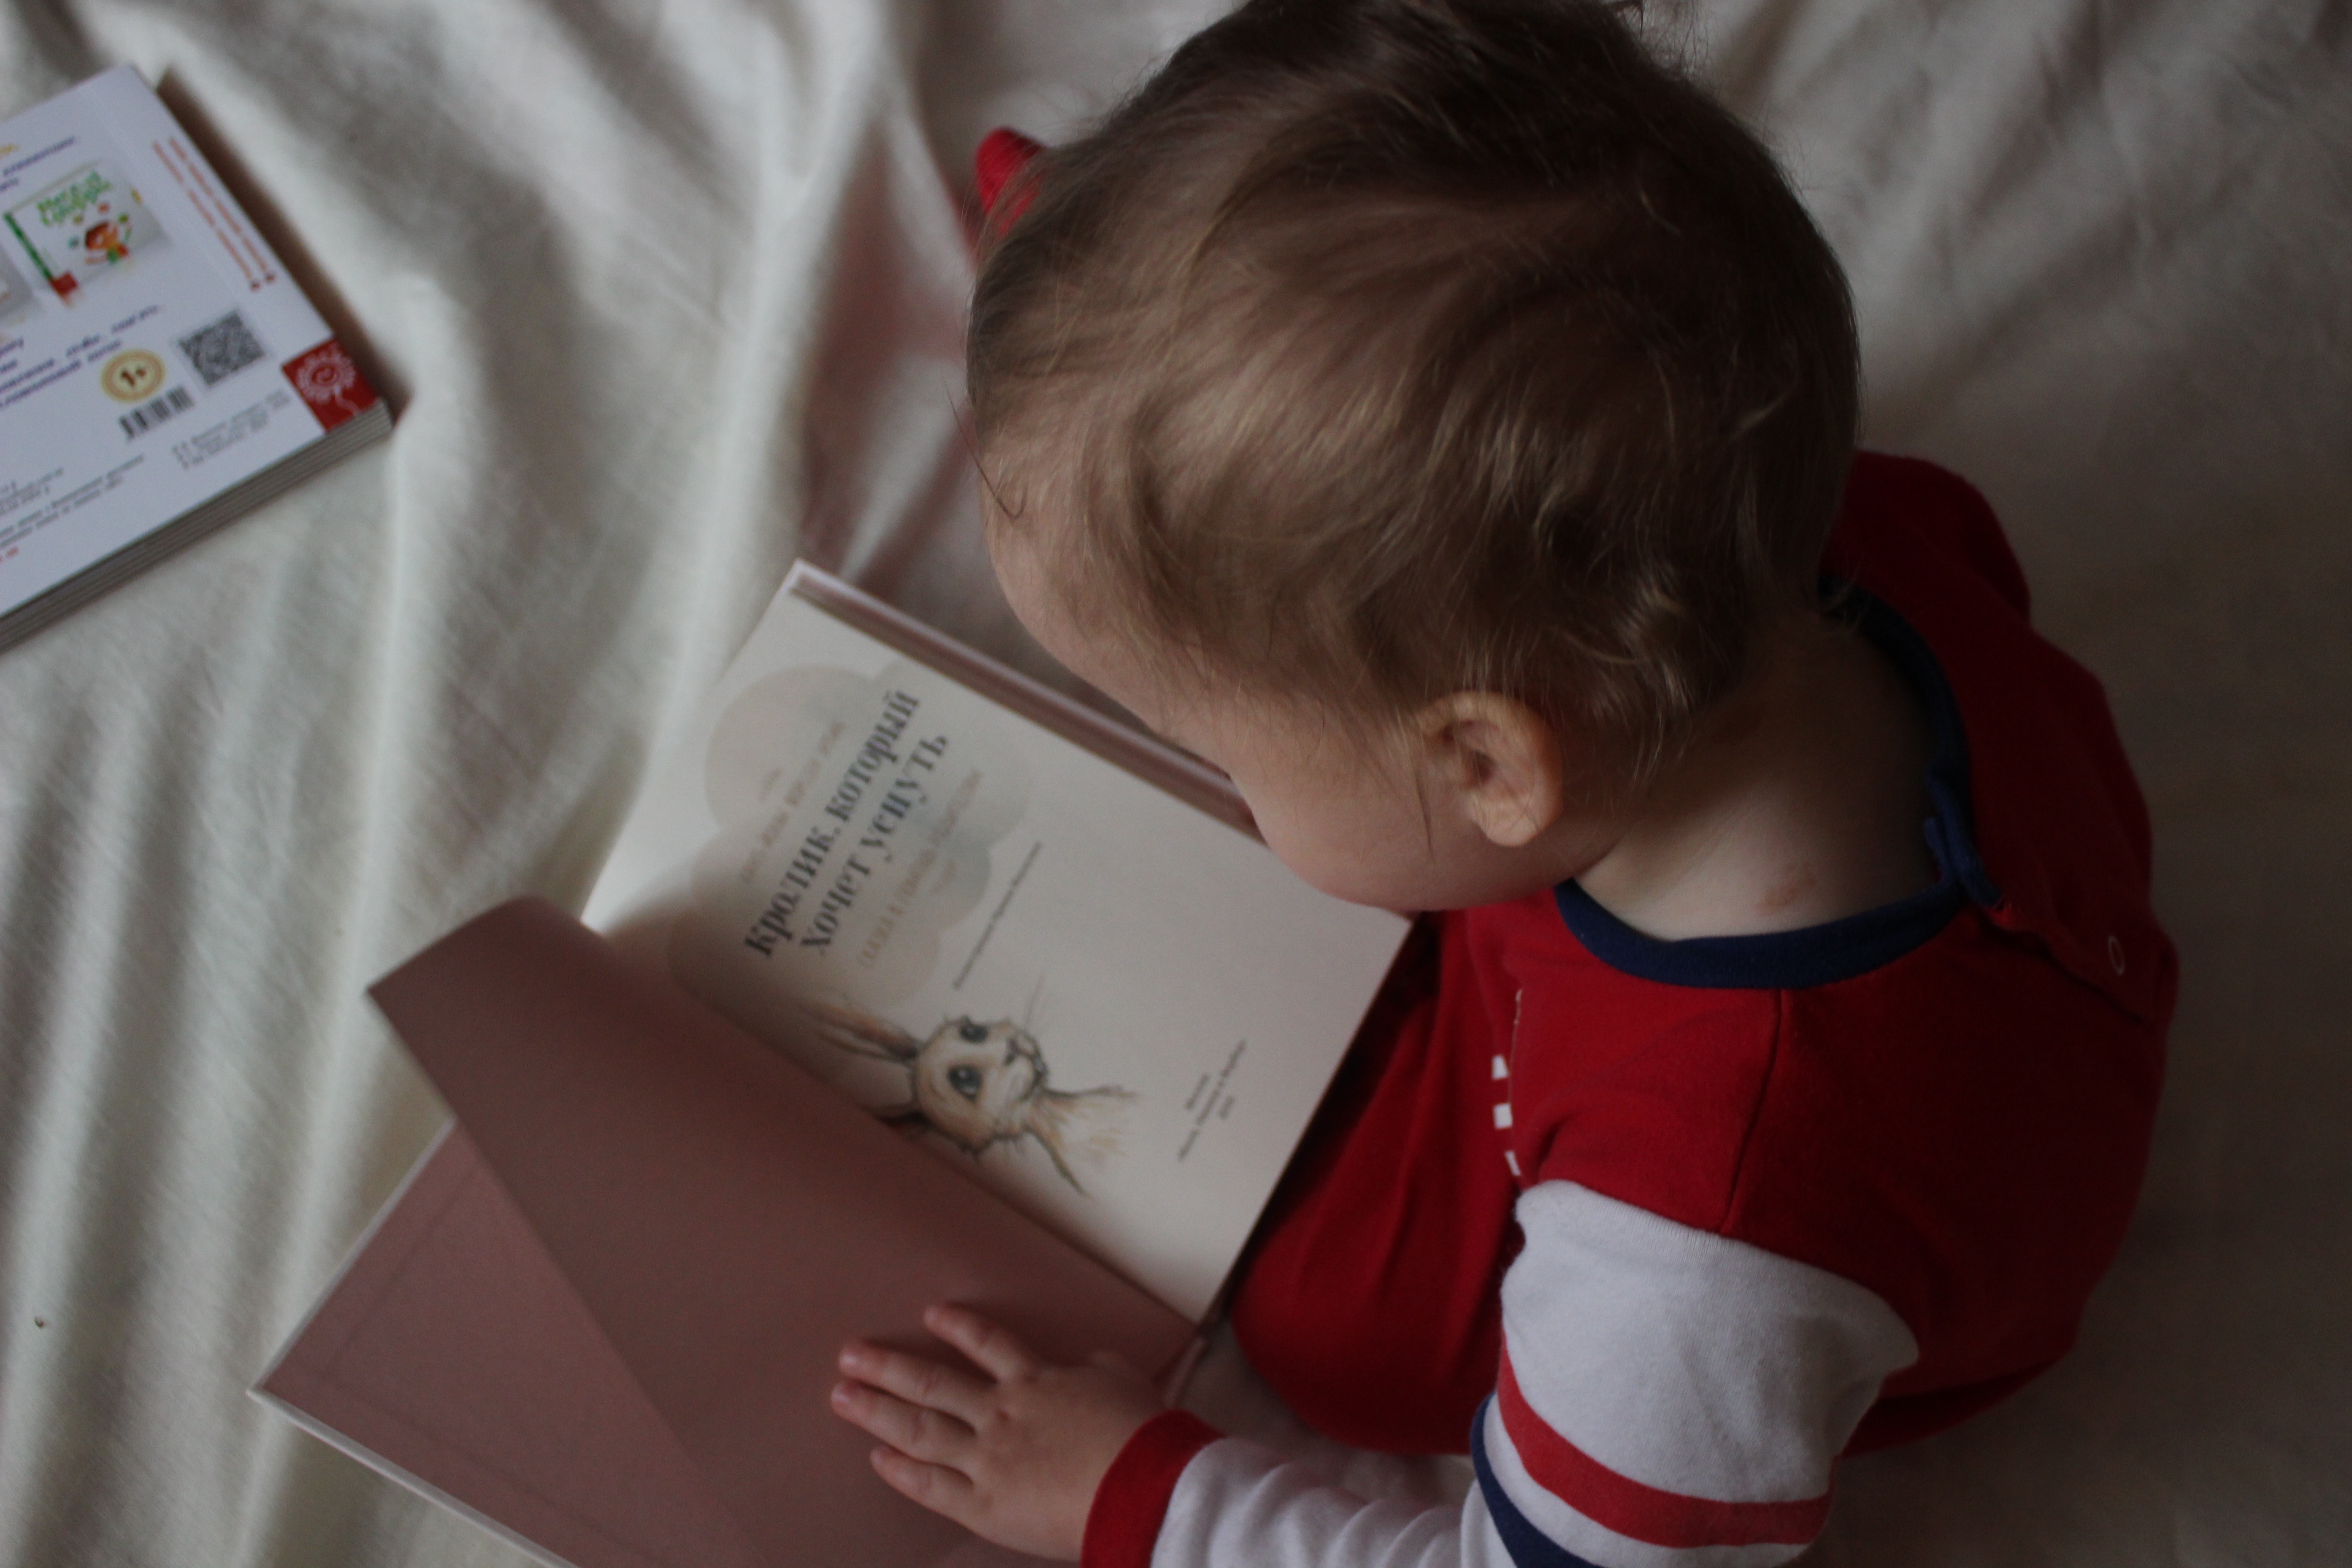 Toddler reading a book.